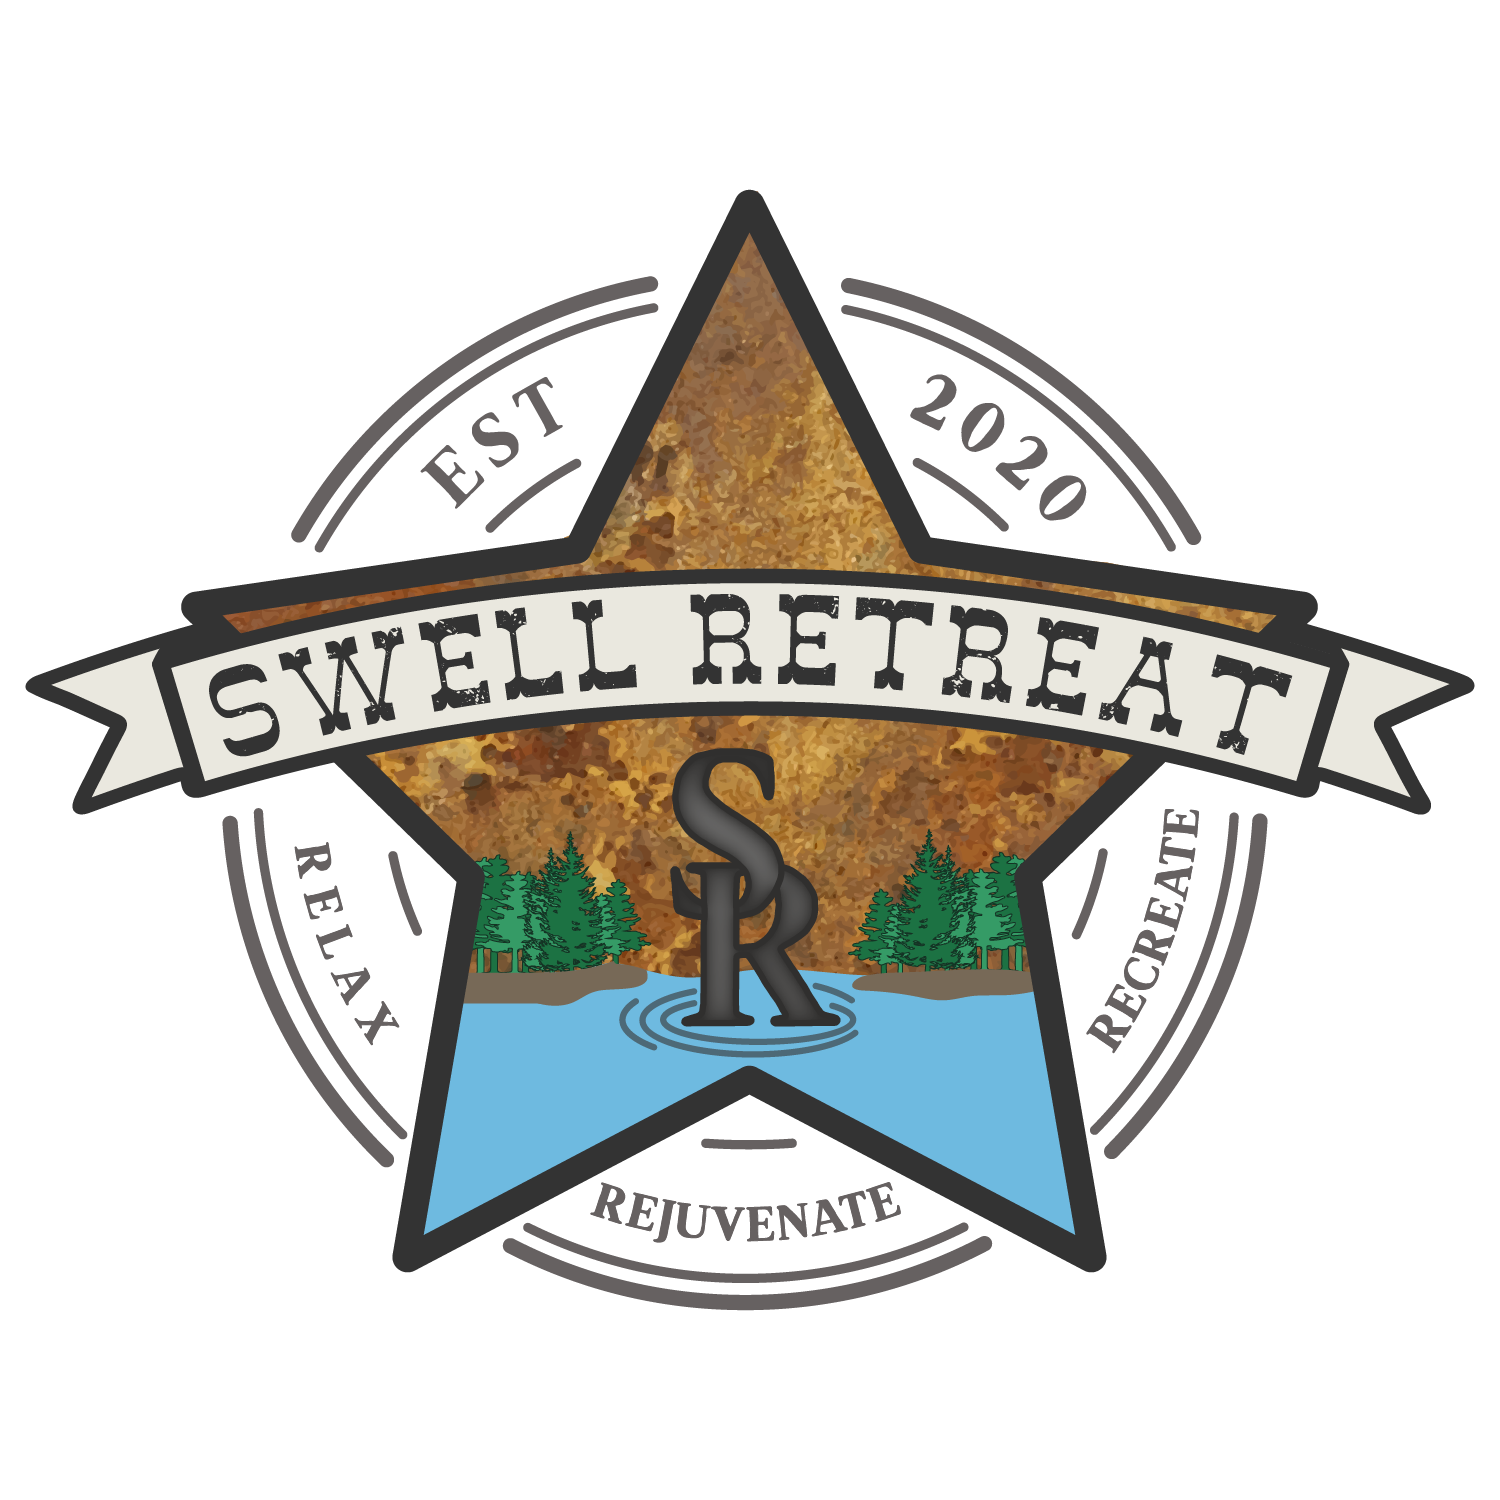 Swell Retreat